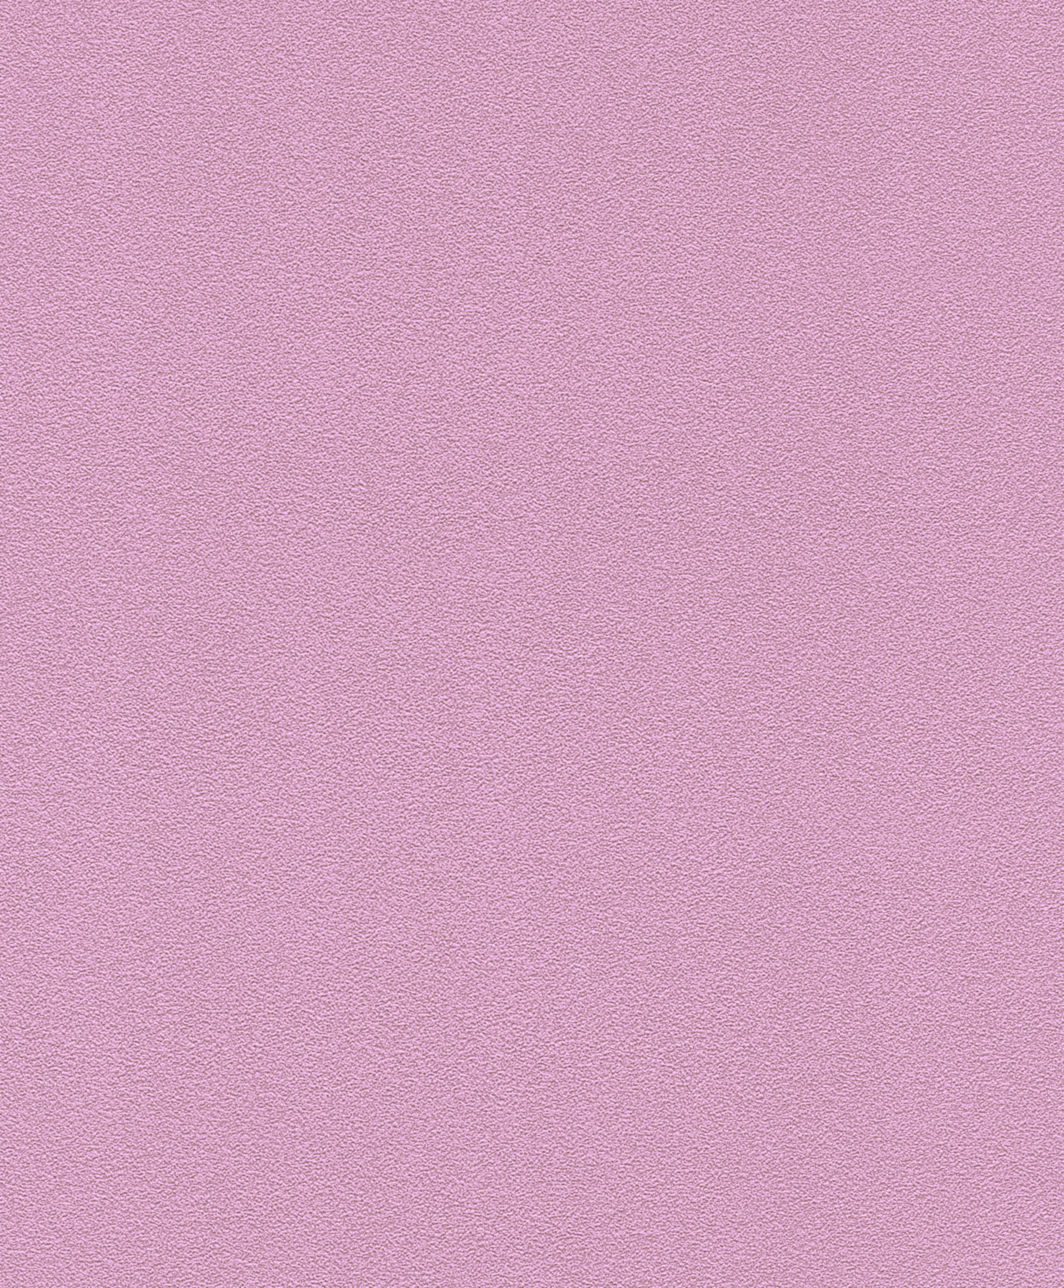 Rózsaszín tapéta